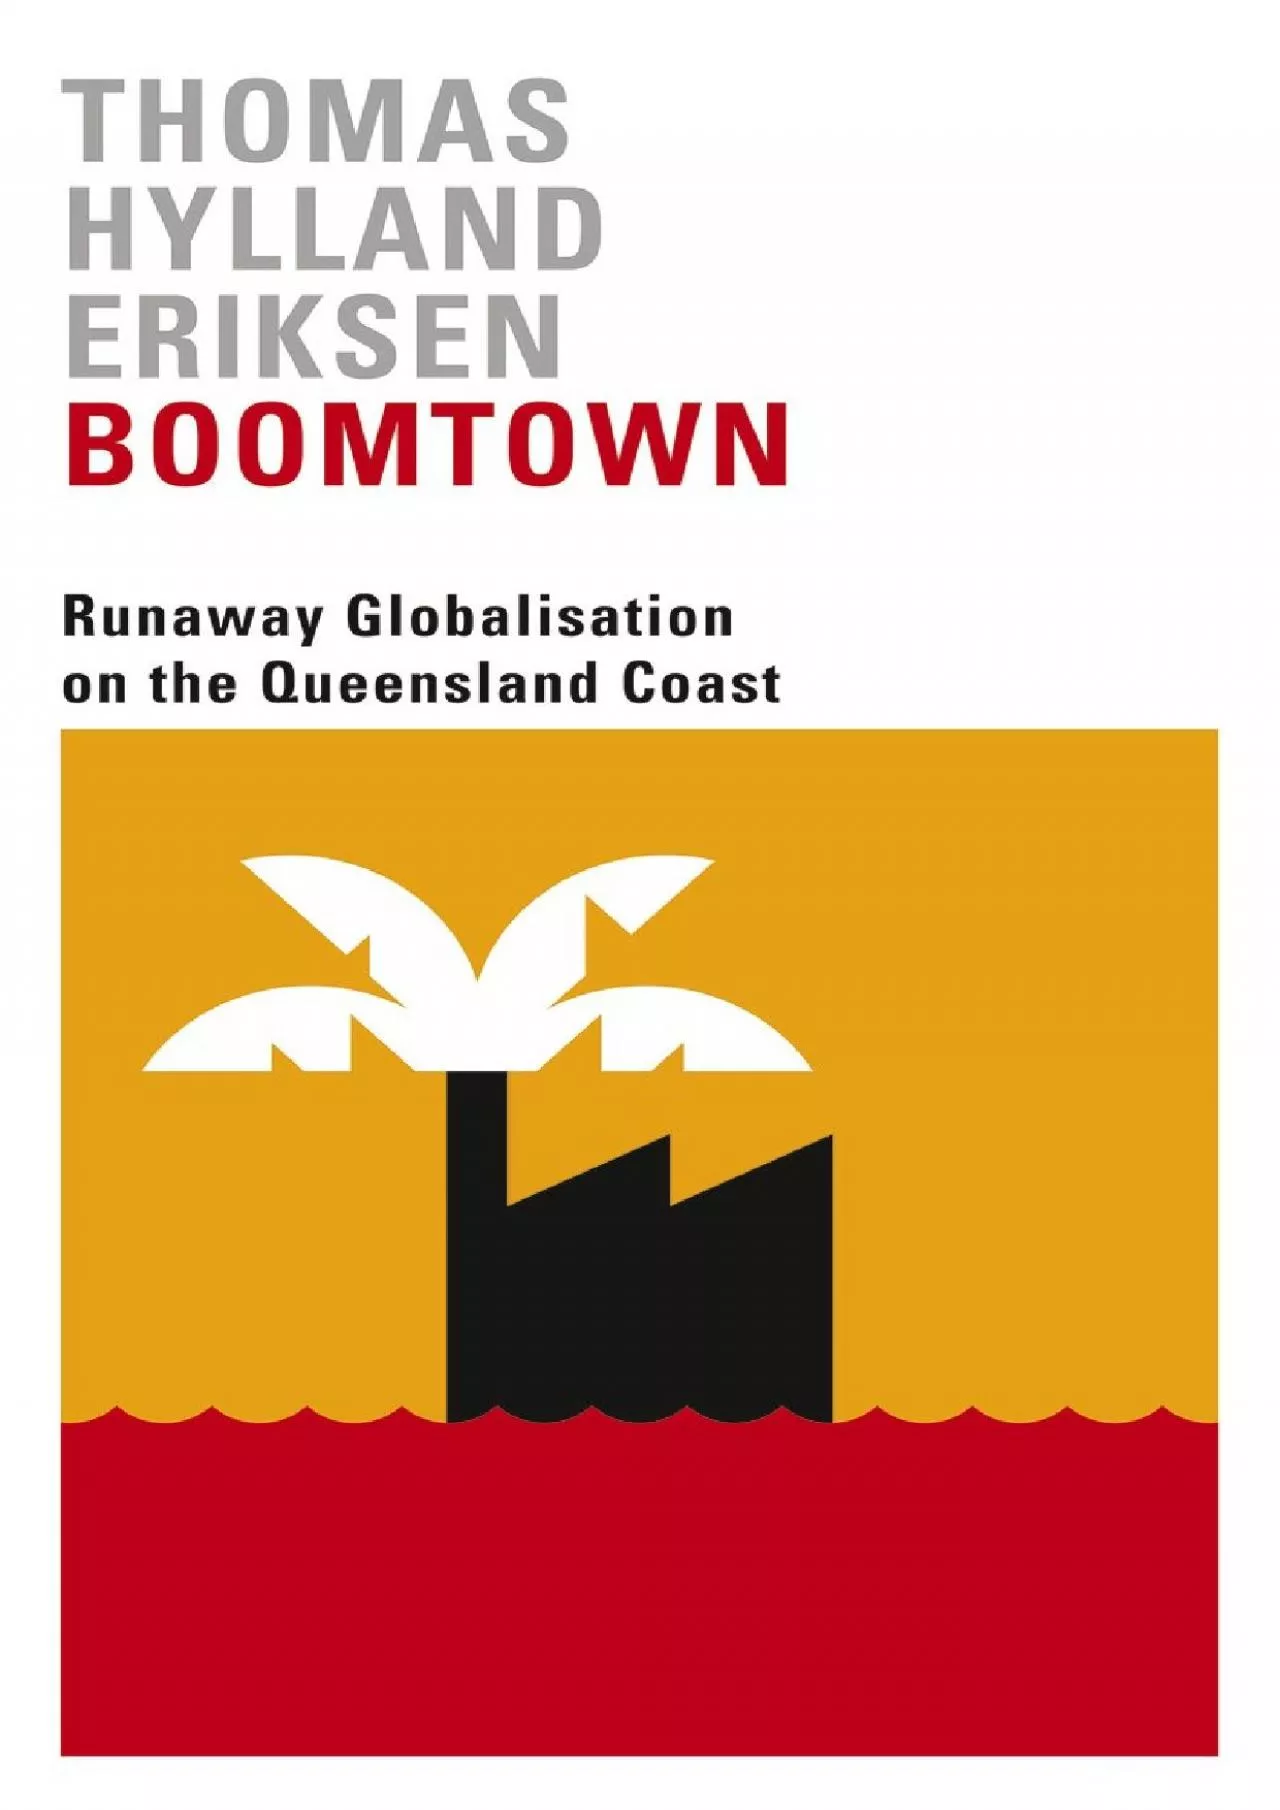 (BOOK)-Boomtown: Runaway Globalisation on the Queensland Coast